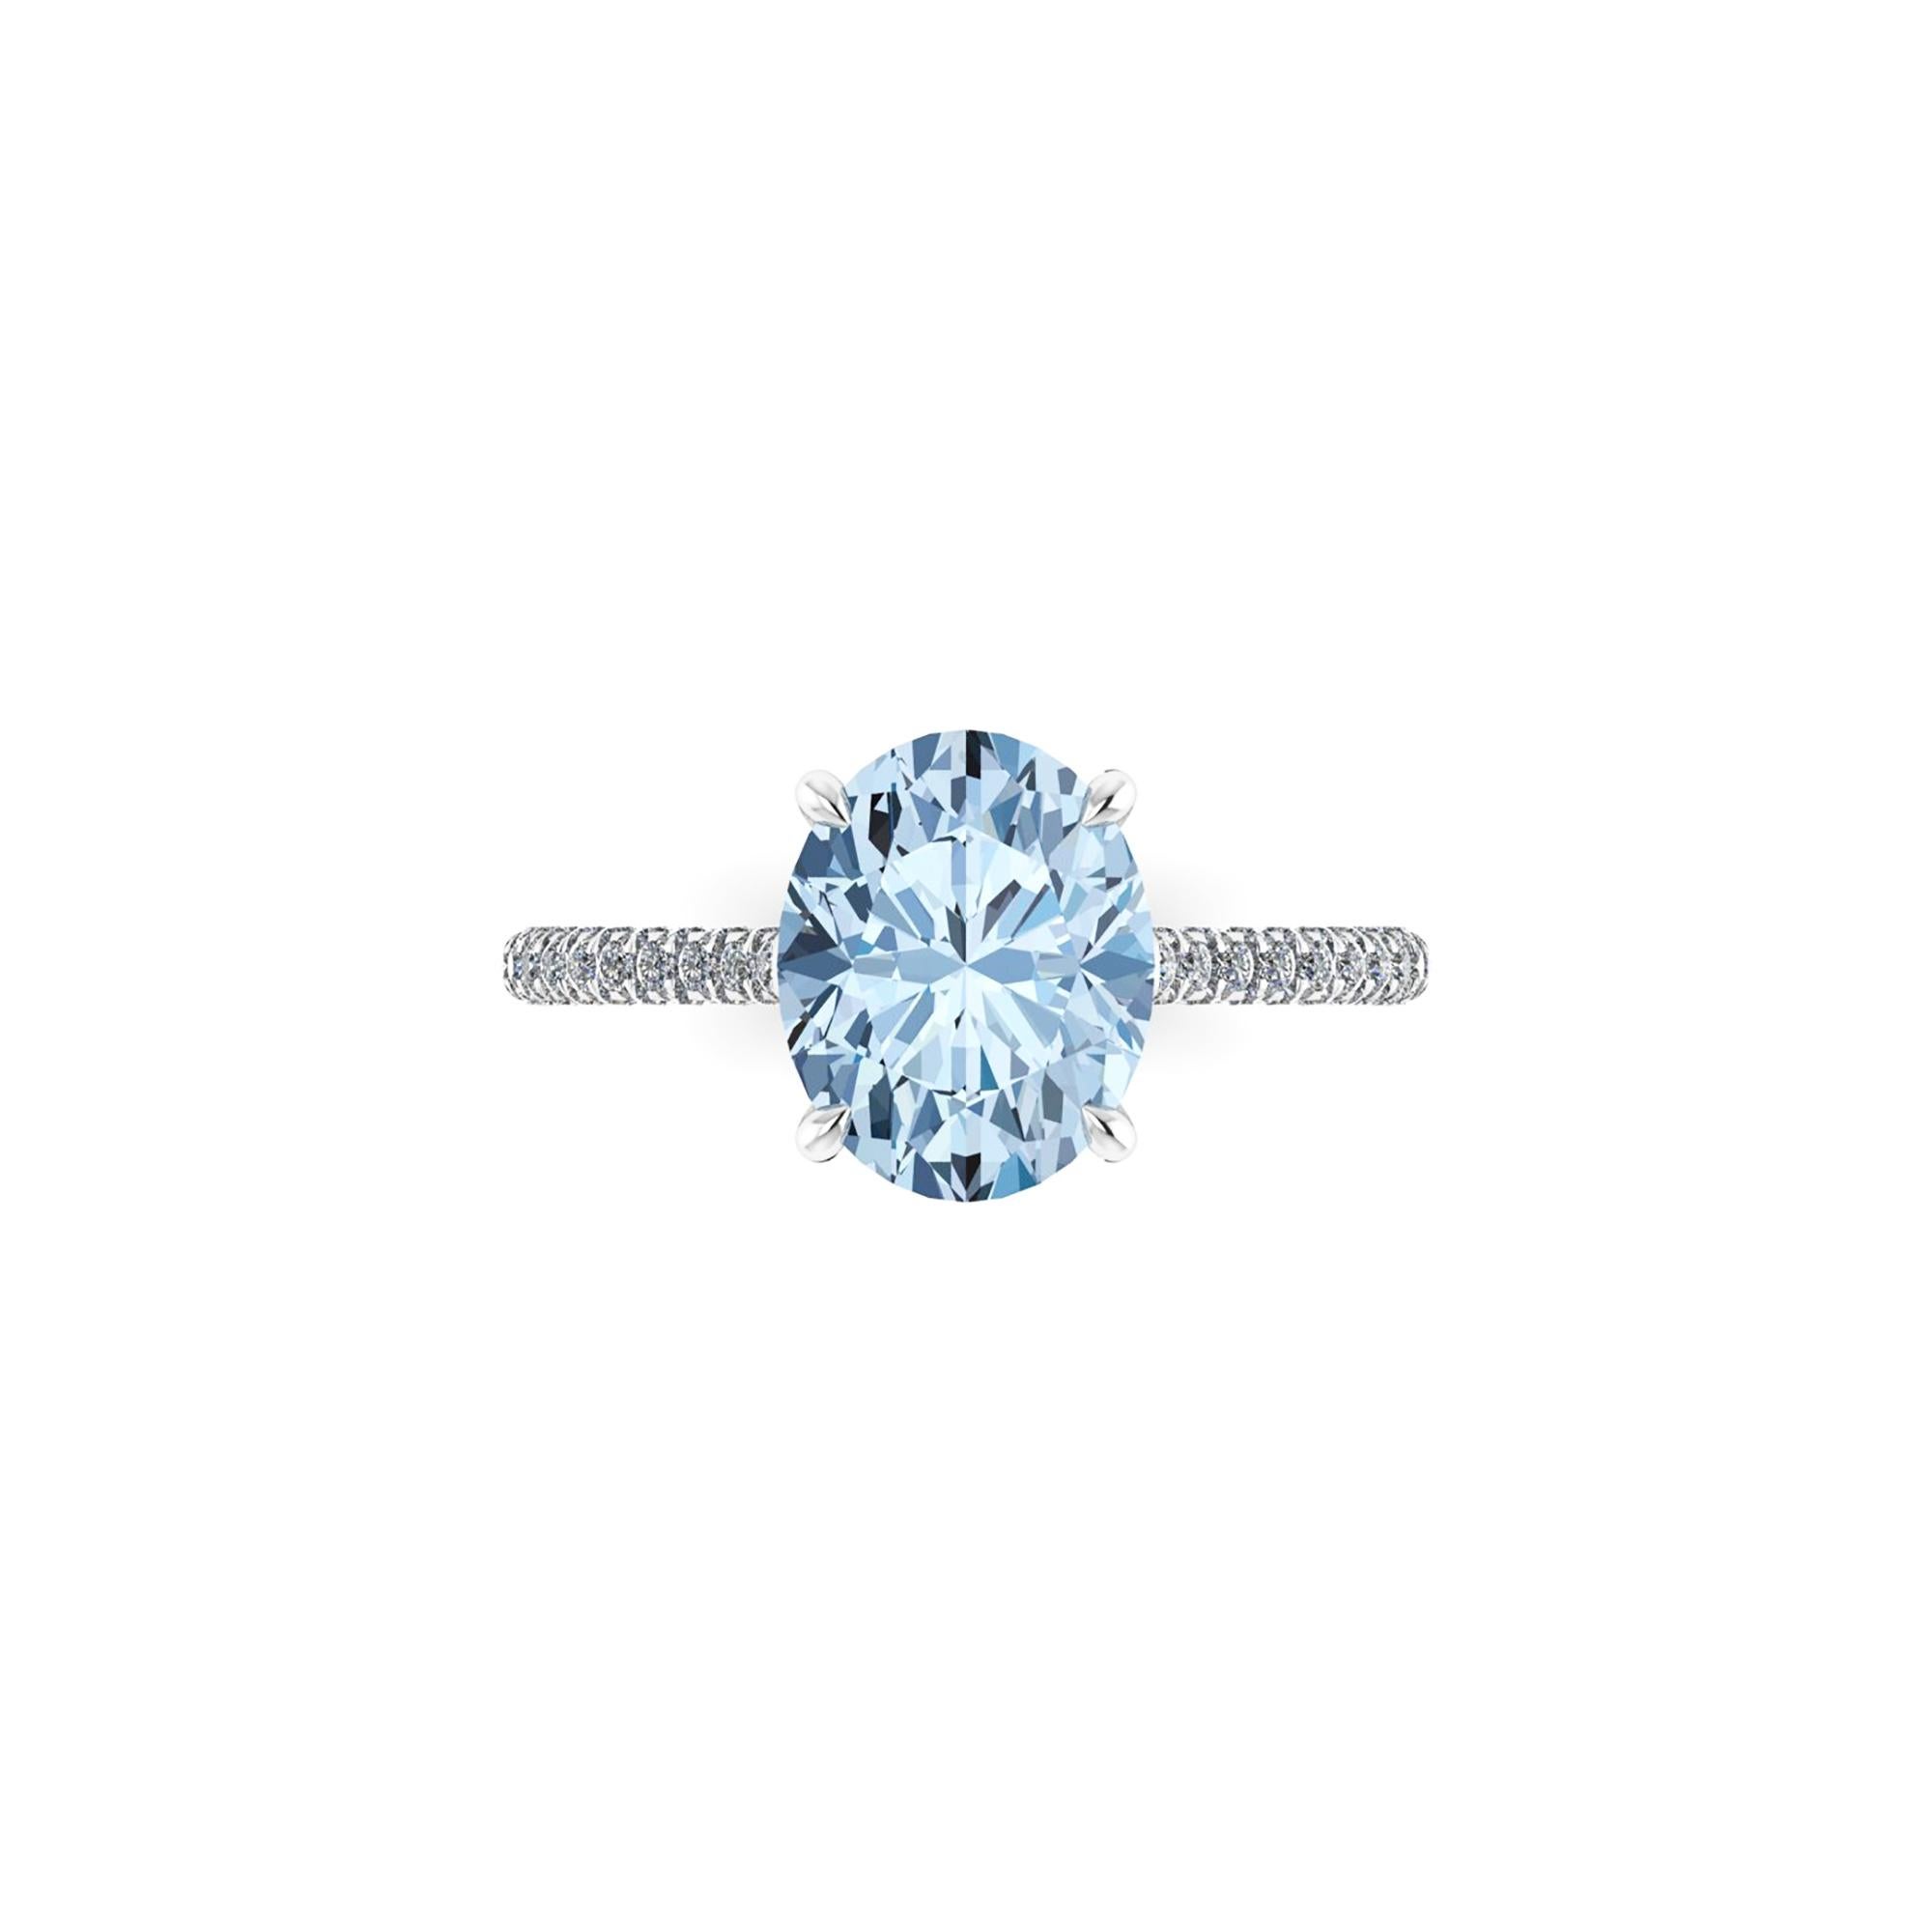 2.5 carat blue diamond